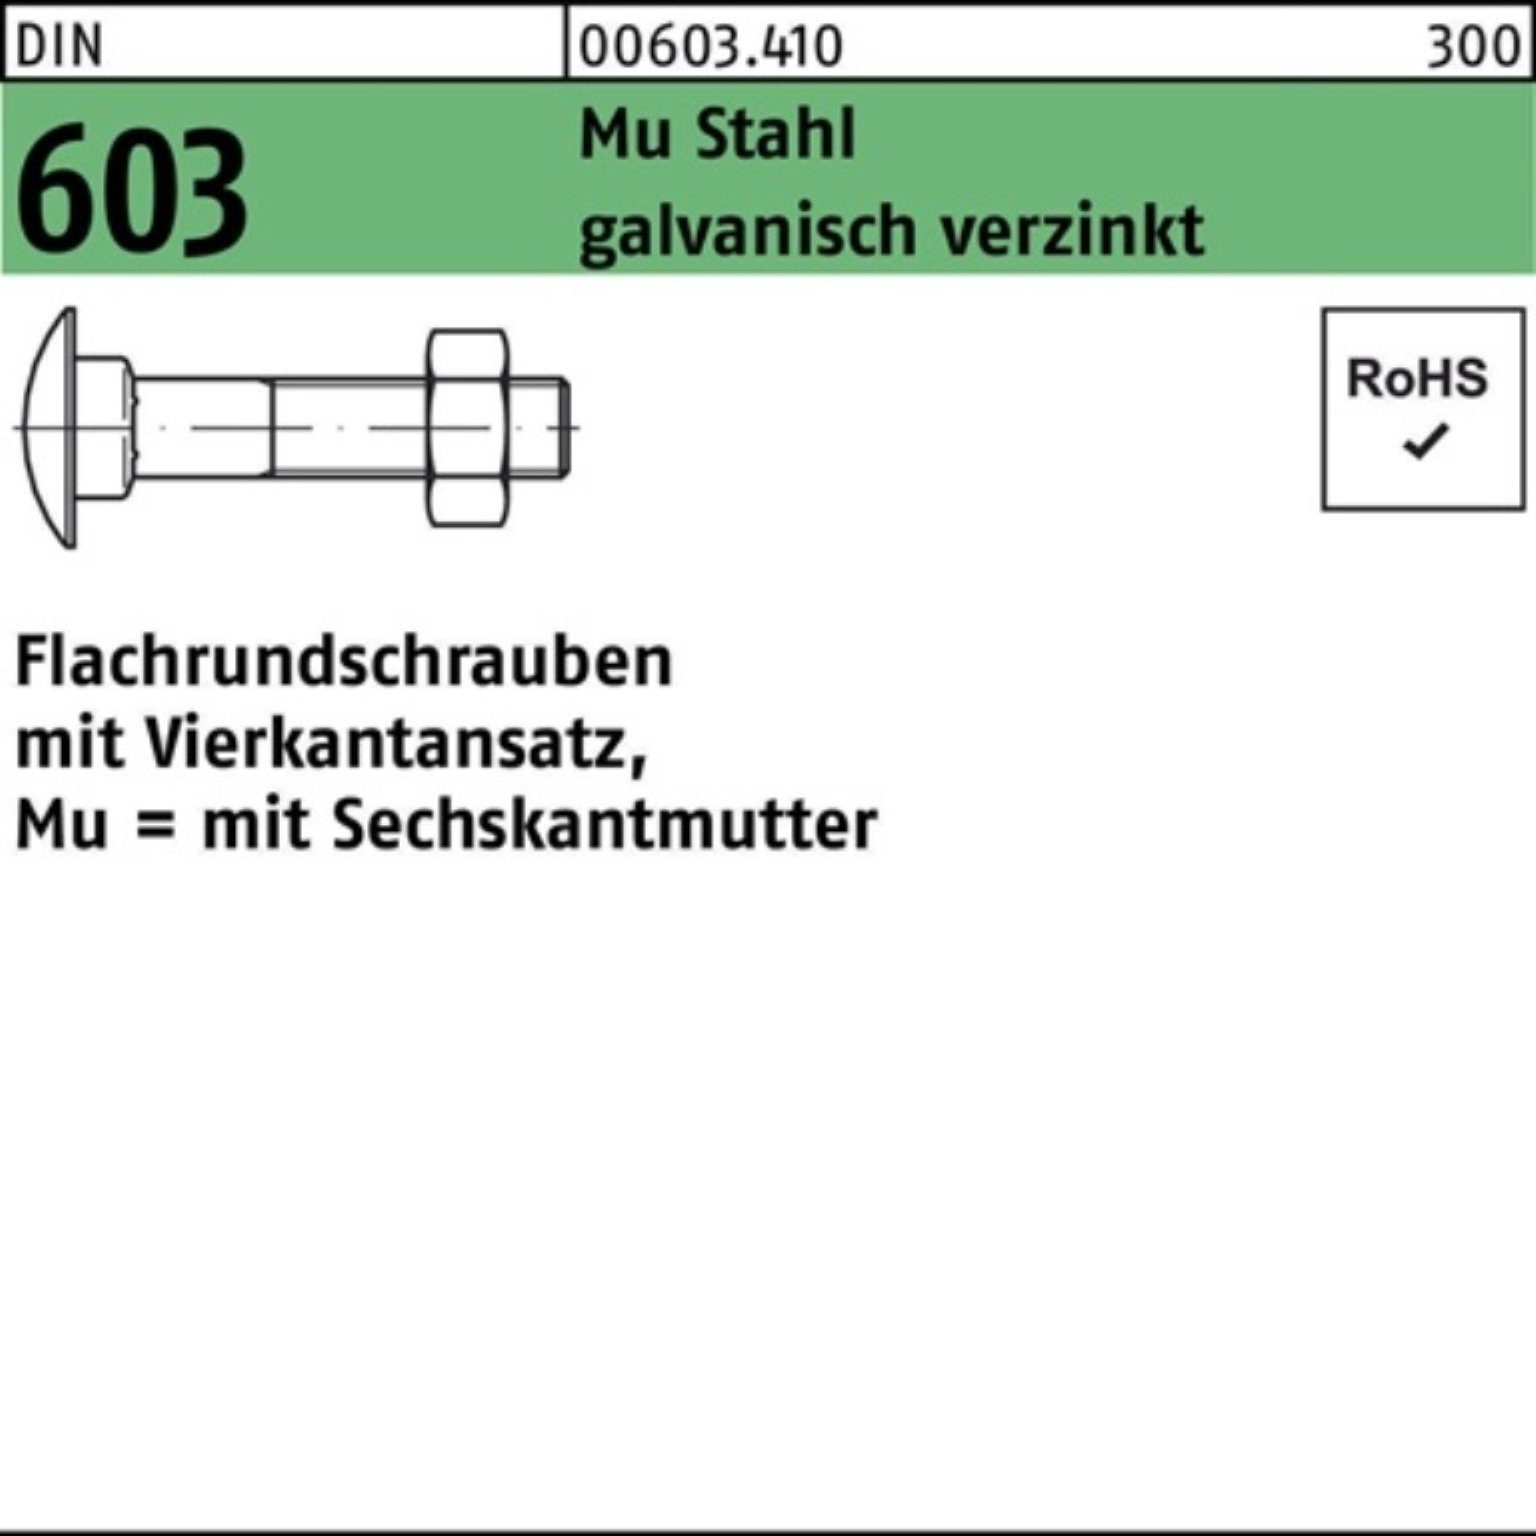 Pack Reyher M12x340 Flachrundschraube 100er 603 DIN Vierkantansatz/6-ktmutter Schraube